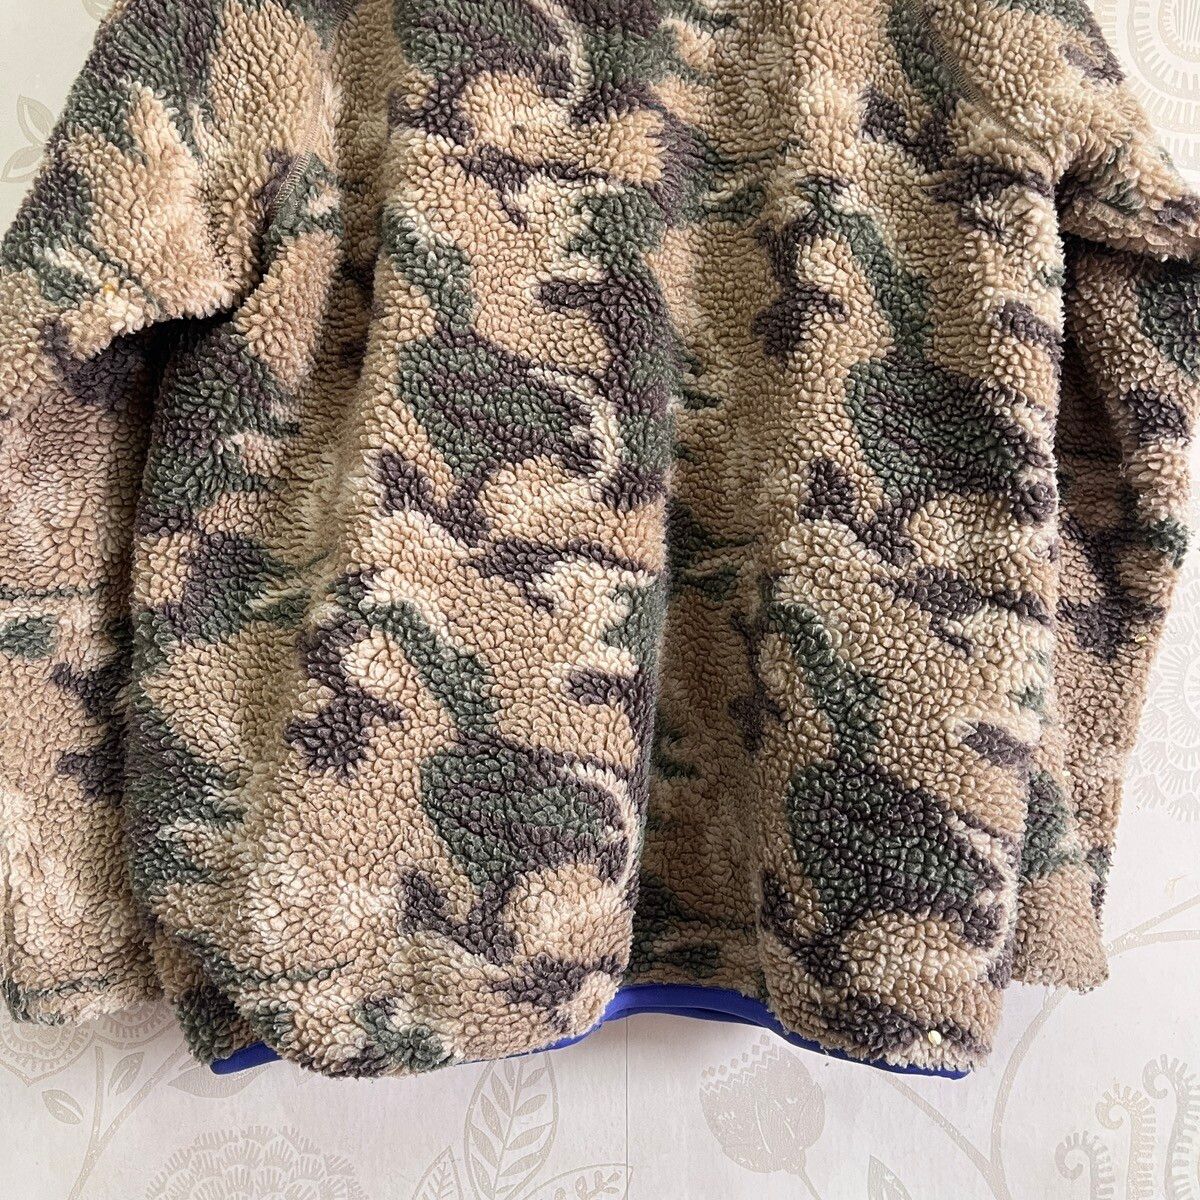 Military - Markey's Big Field Camouflage Sweater Hoodie Japanese - 11